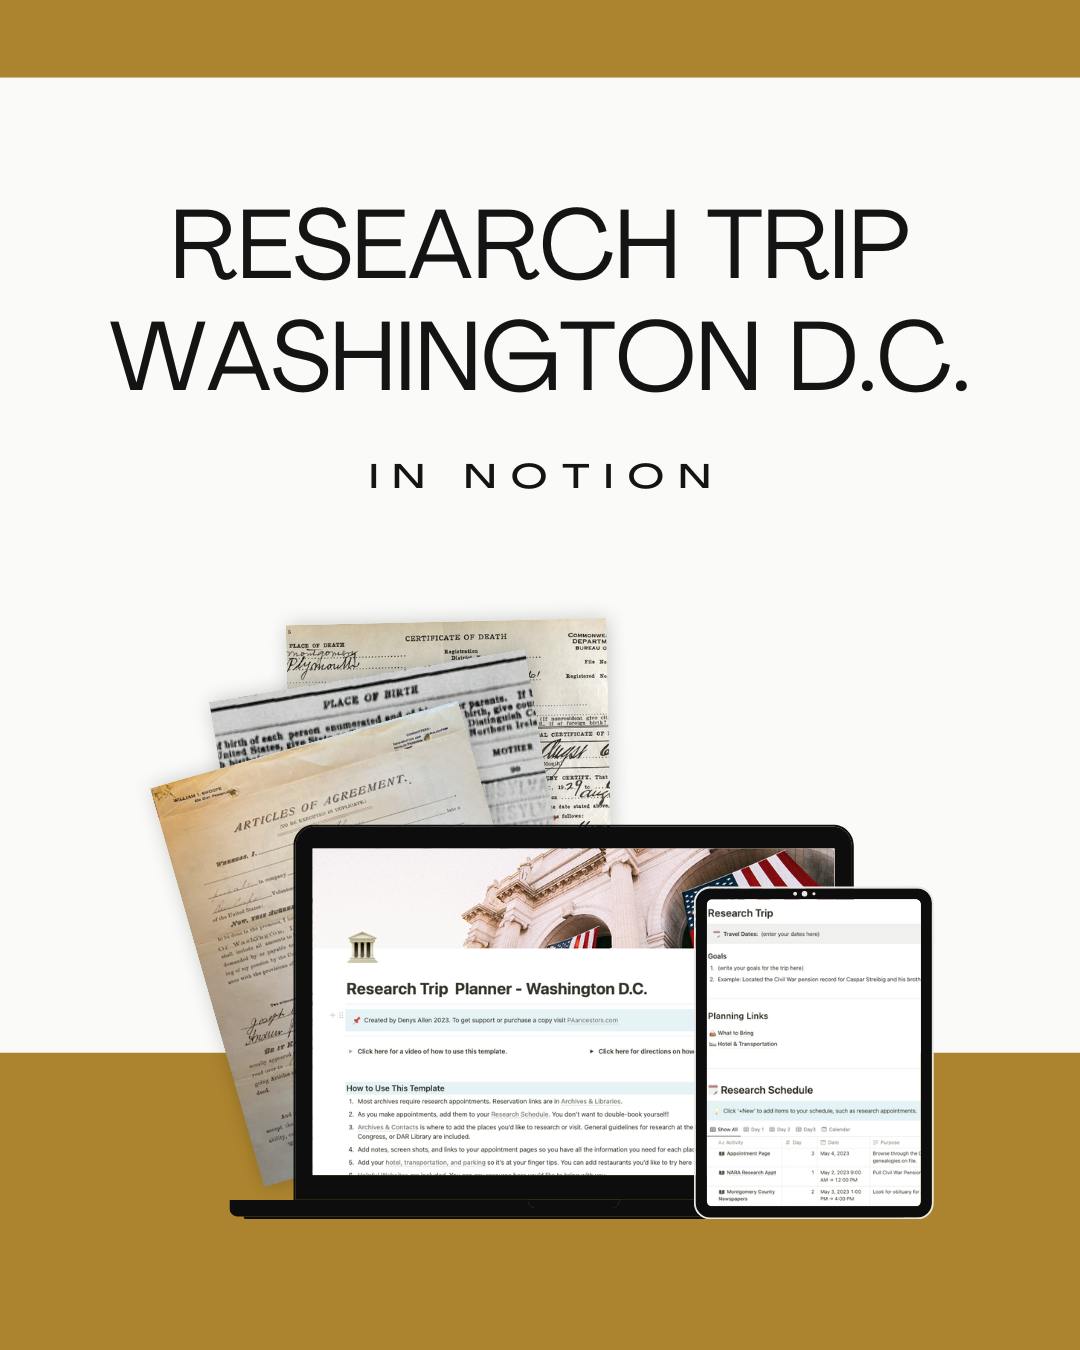 Research Trip Planner - Washington D.C.